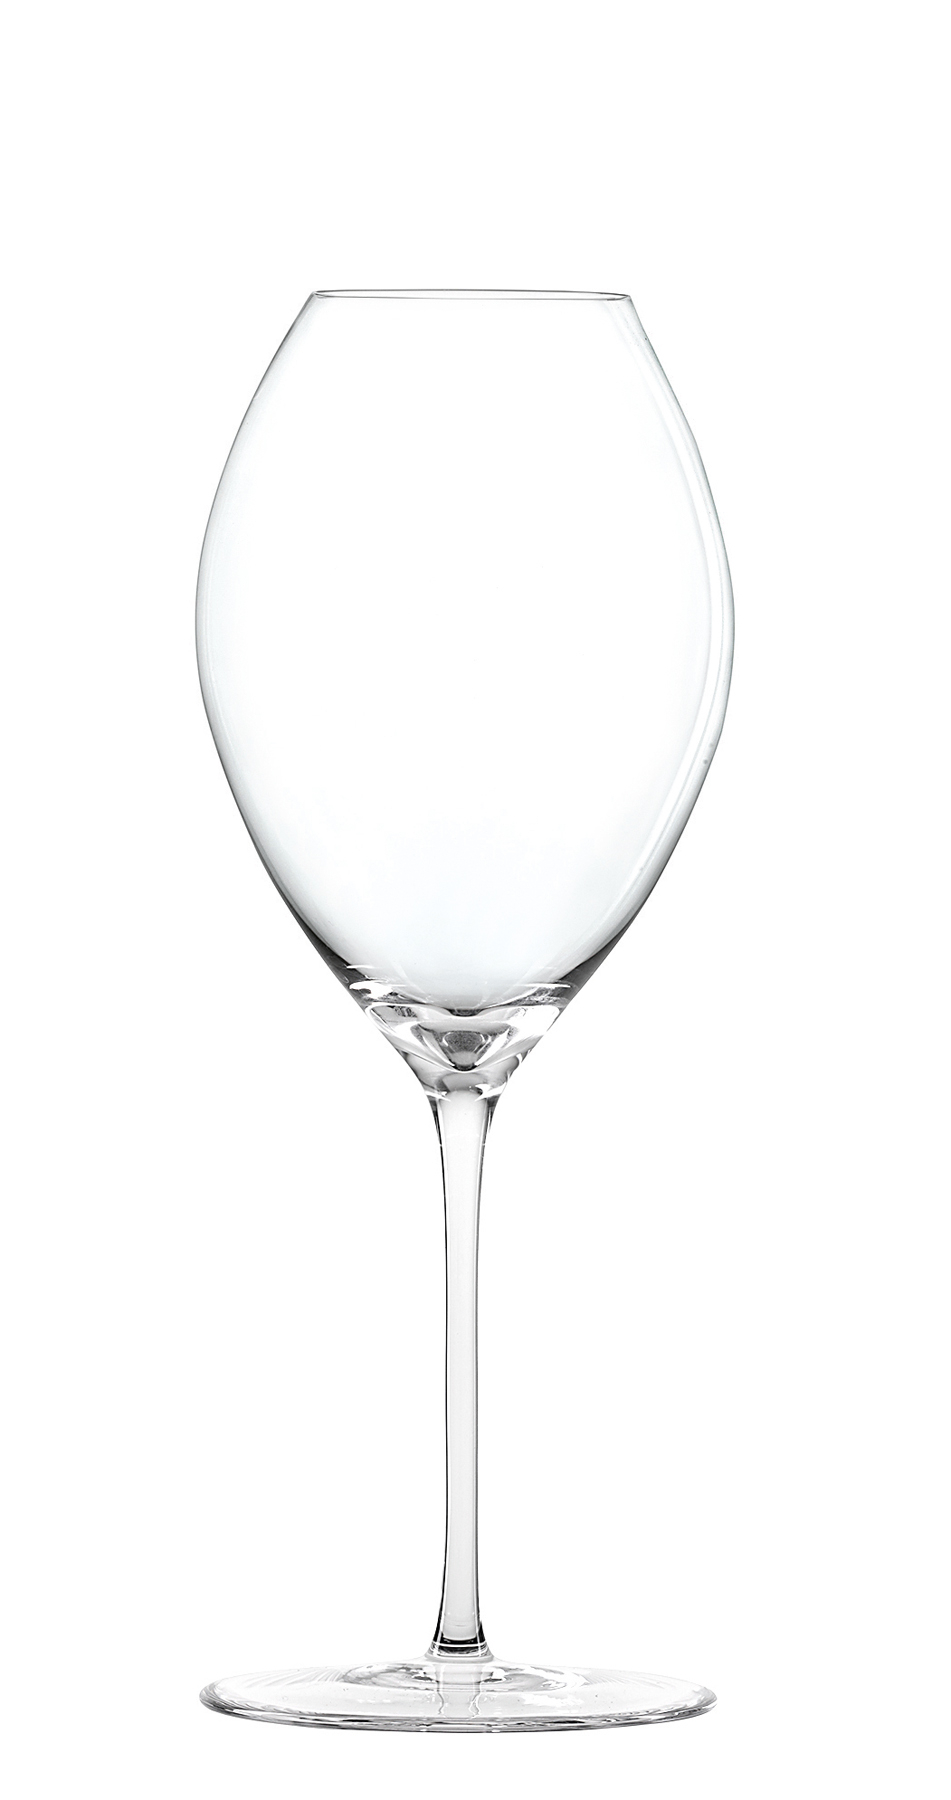 White wine glass 'Novo', Spiegelau - 480ml (1 pc.)